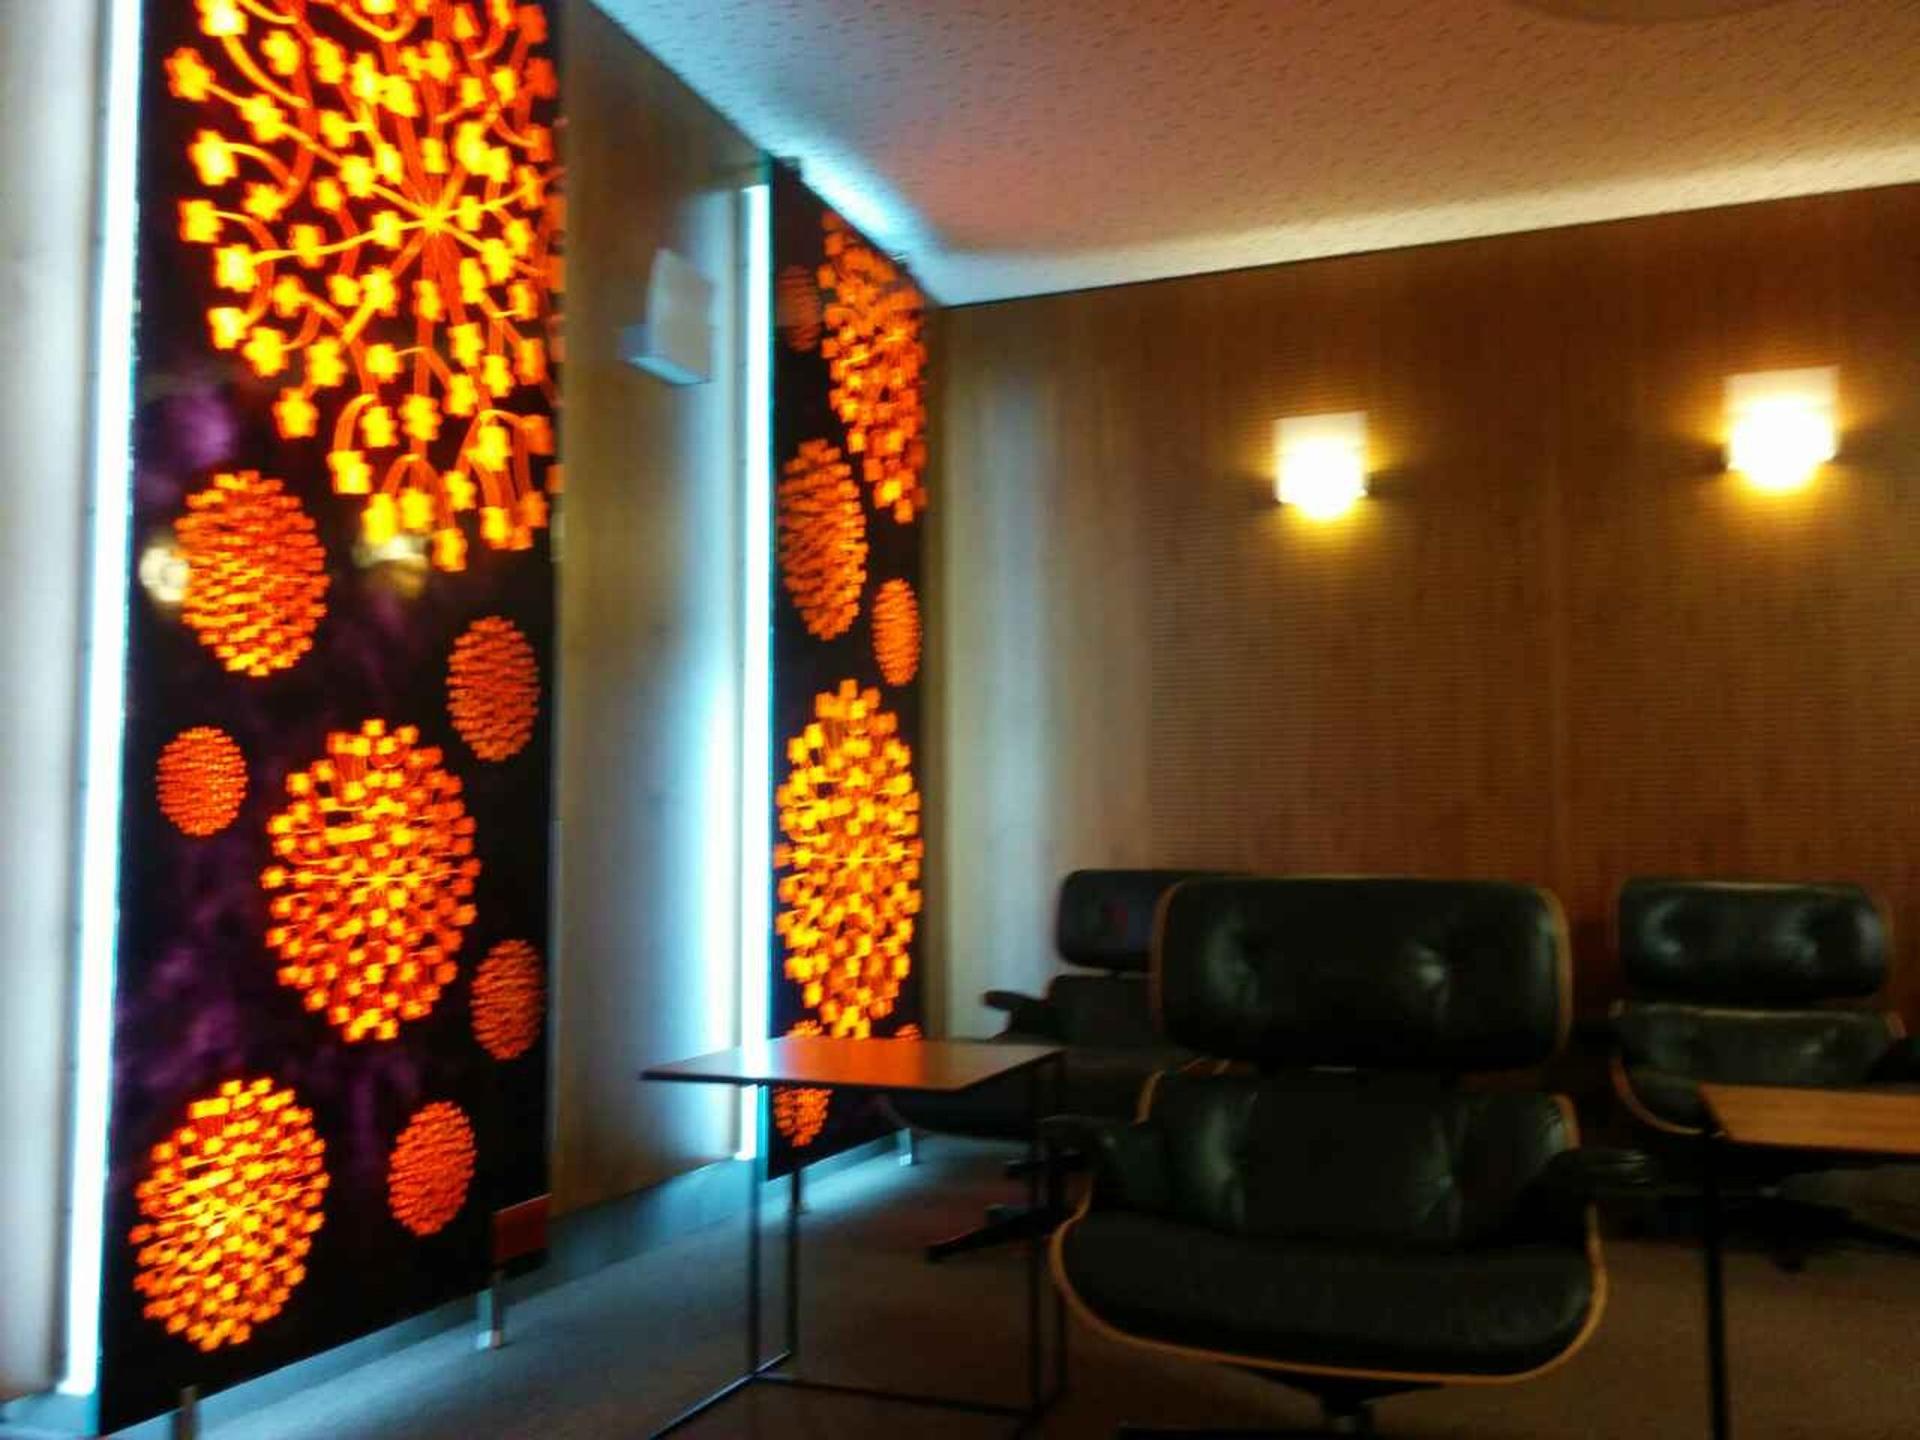 Executive Lounge image 7 of 18